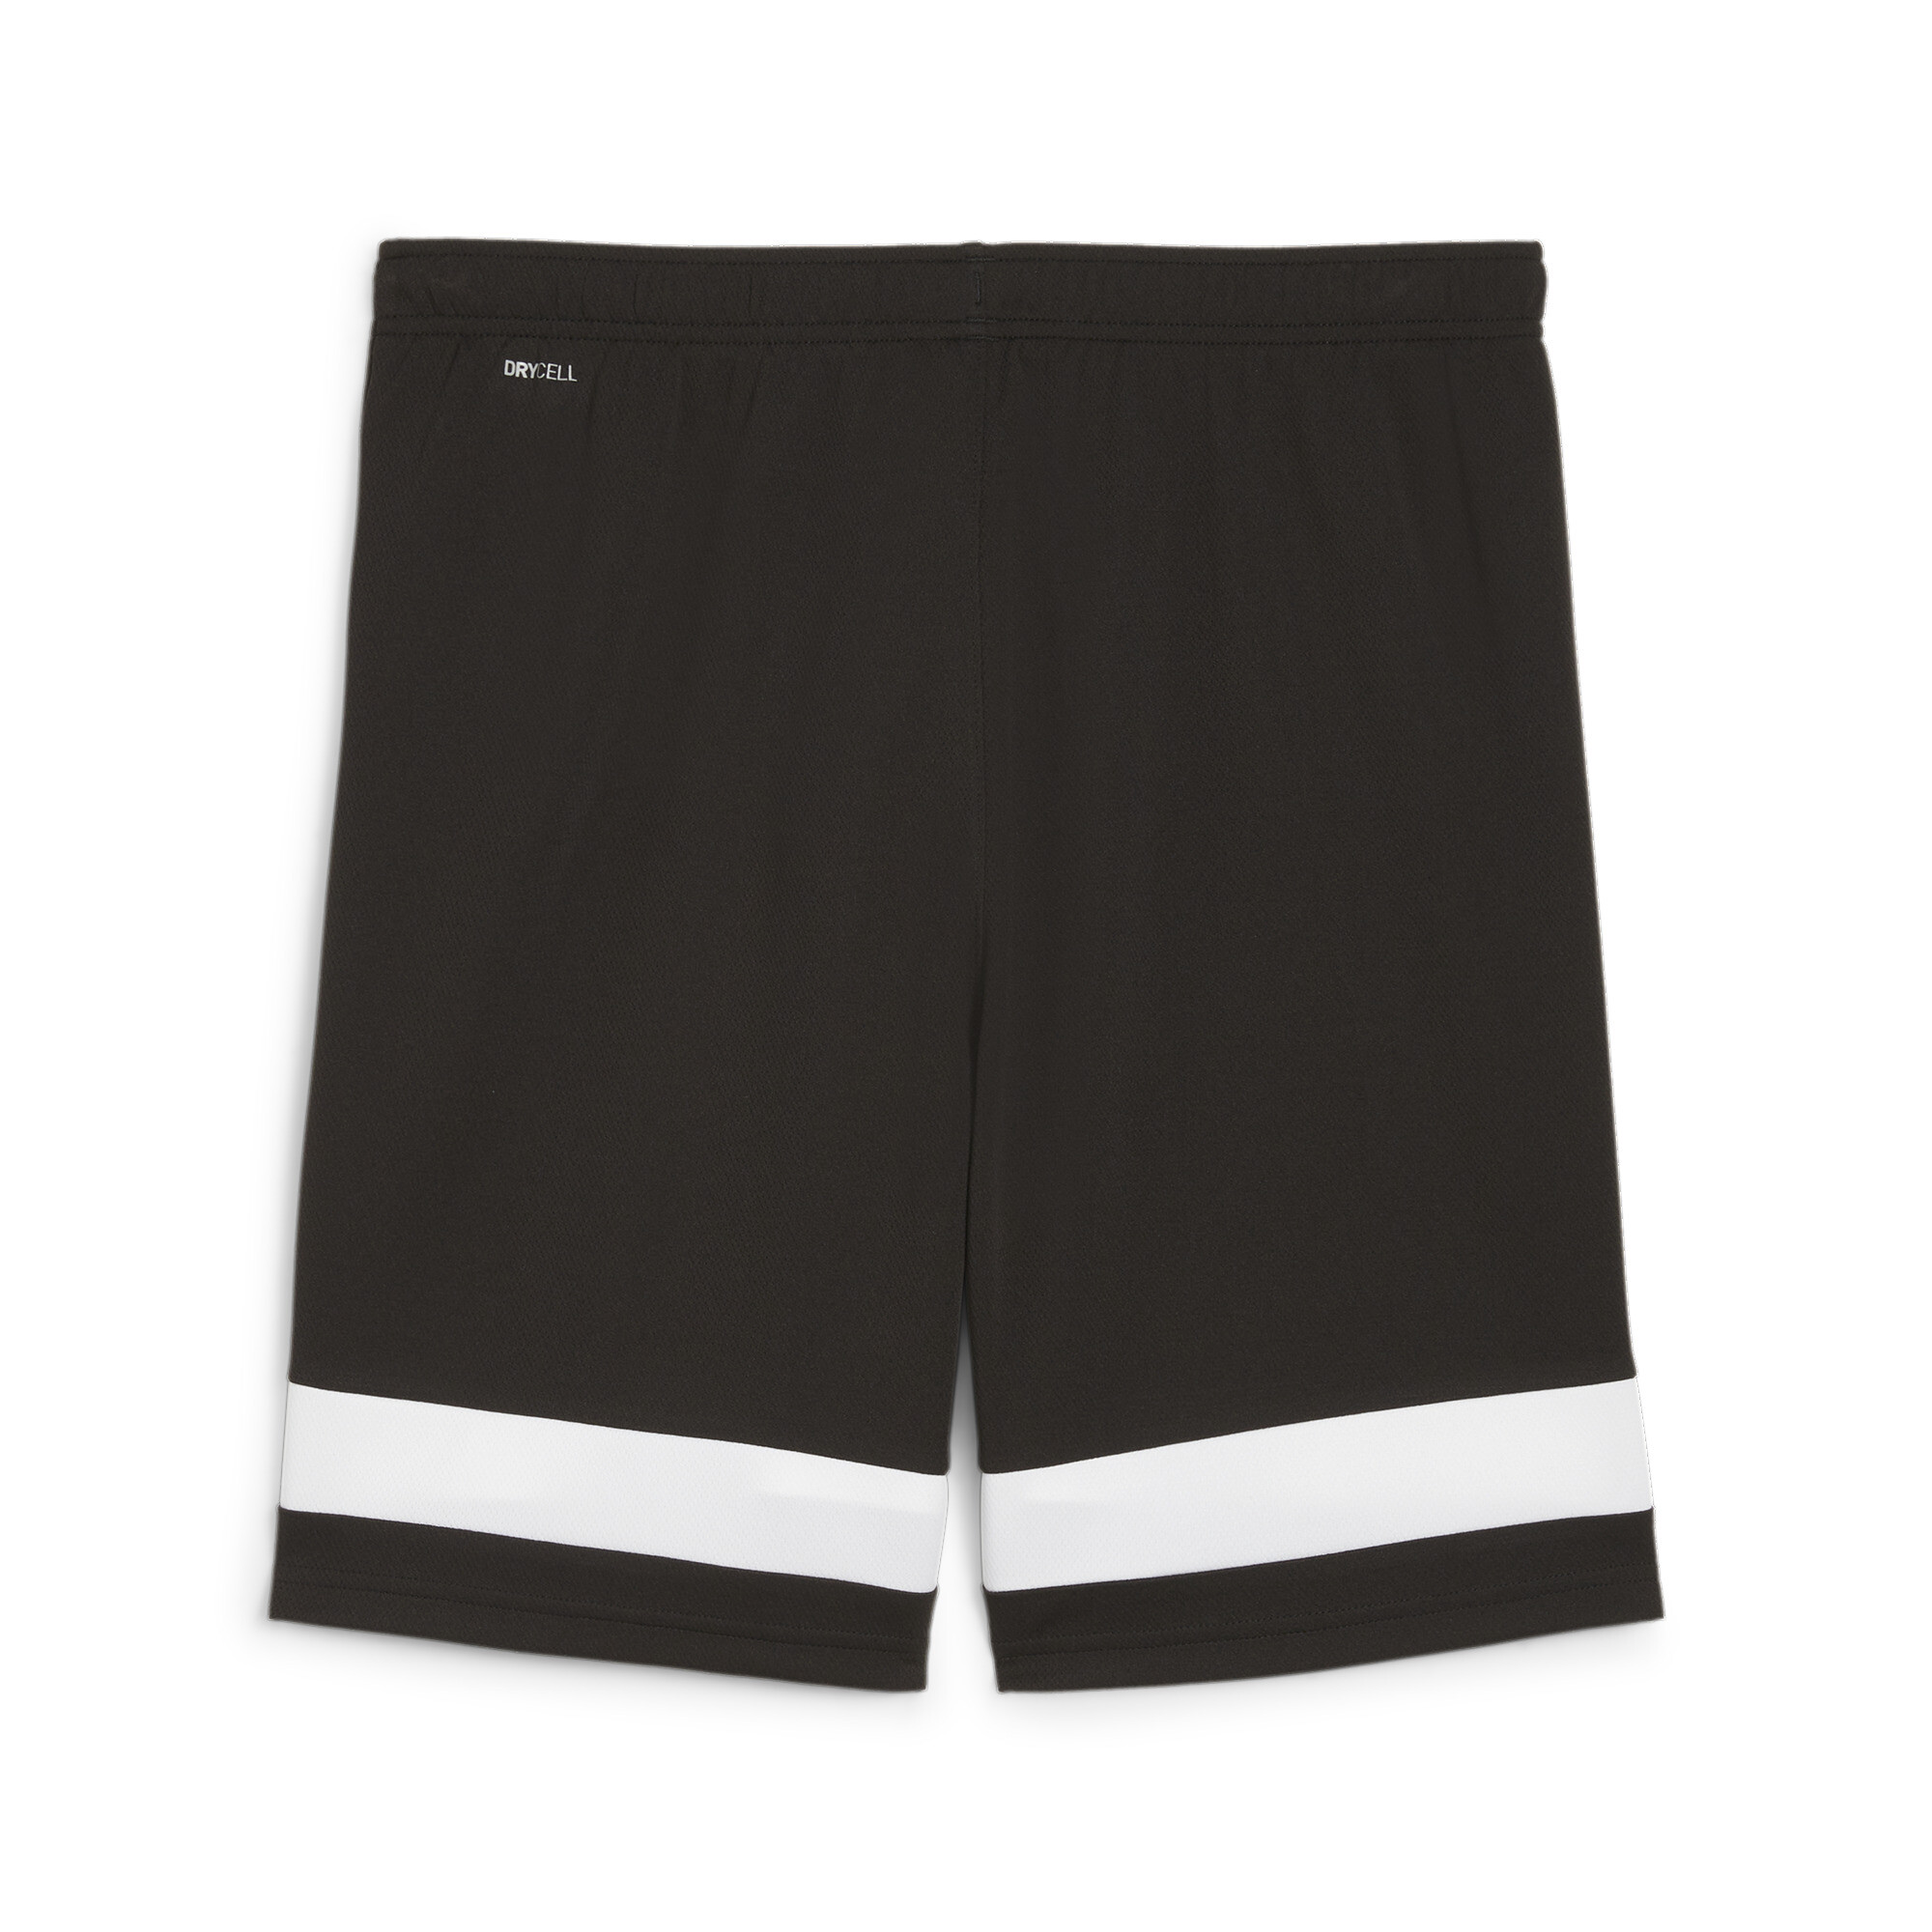 Men's PUMA IndividualRISE Football Shorts In Black, Size Large